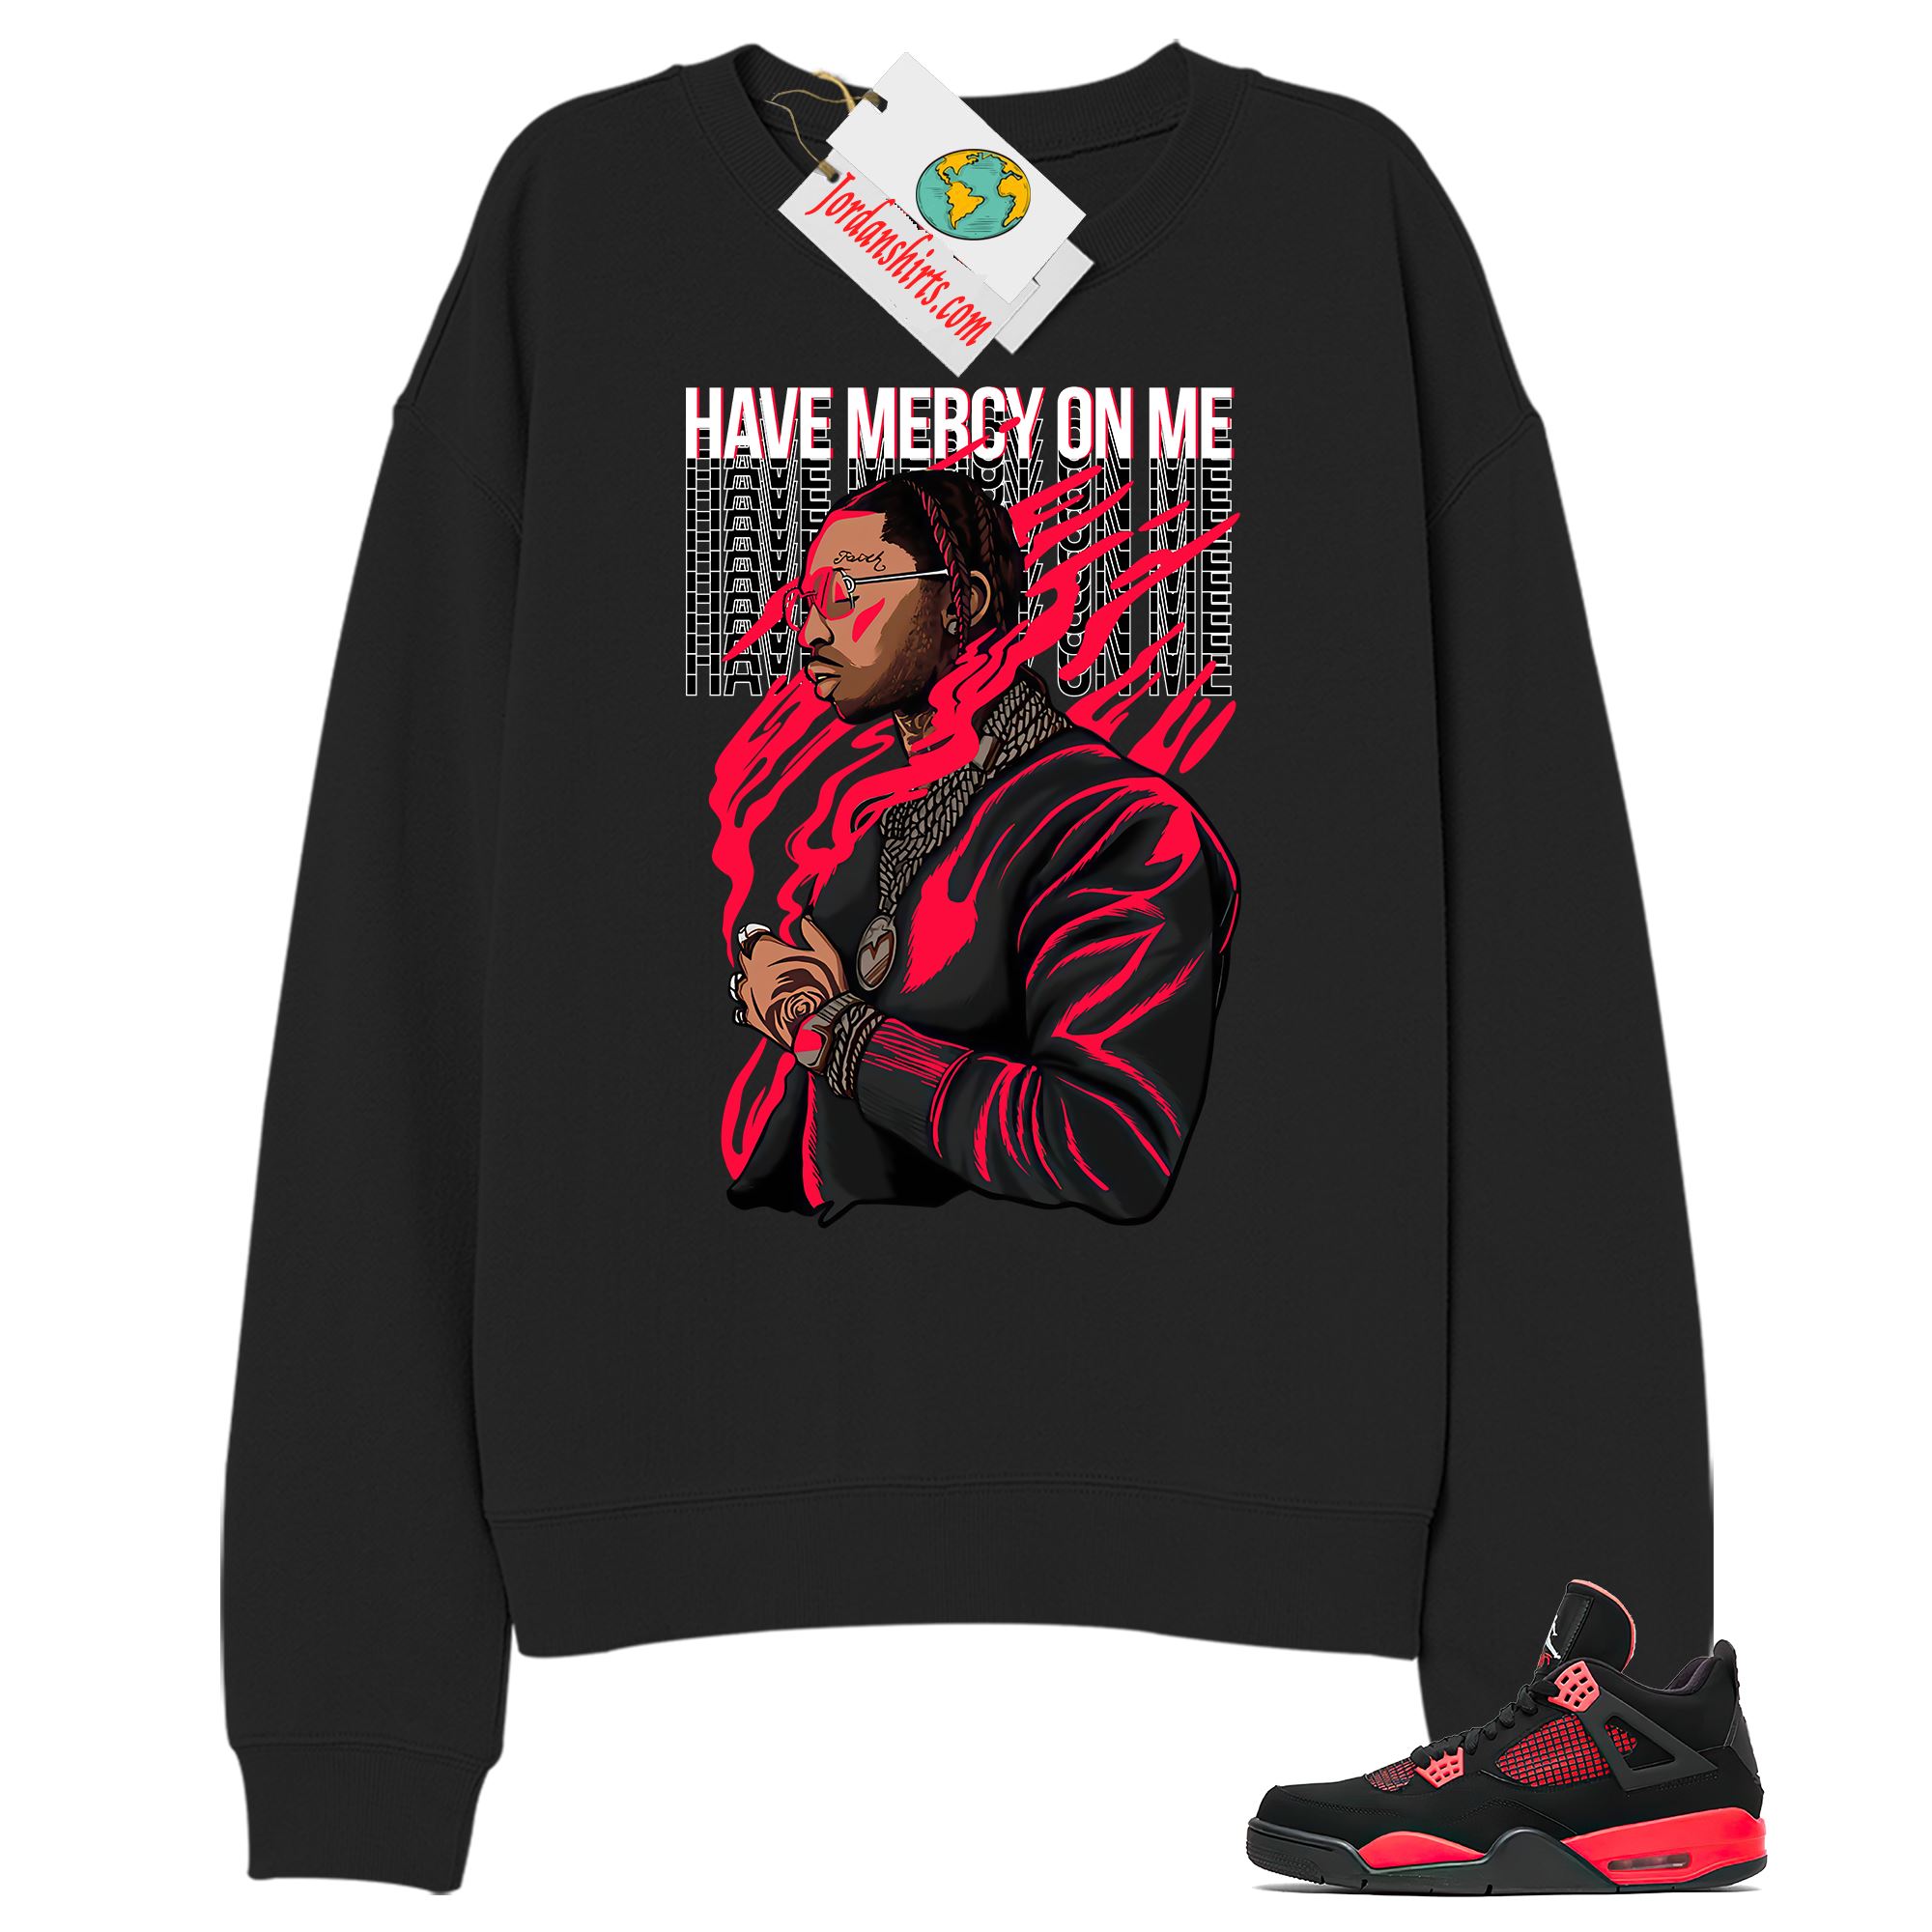 Jordan 4 Sweatshirt, Have Mercy On Me Black Sweatshirt Air Jordan 4 Red Thunder 4s Plus Size Up To 5xl